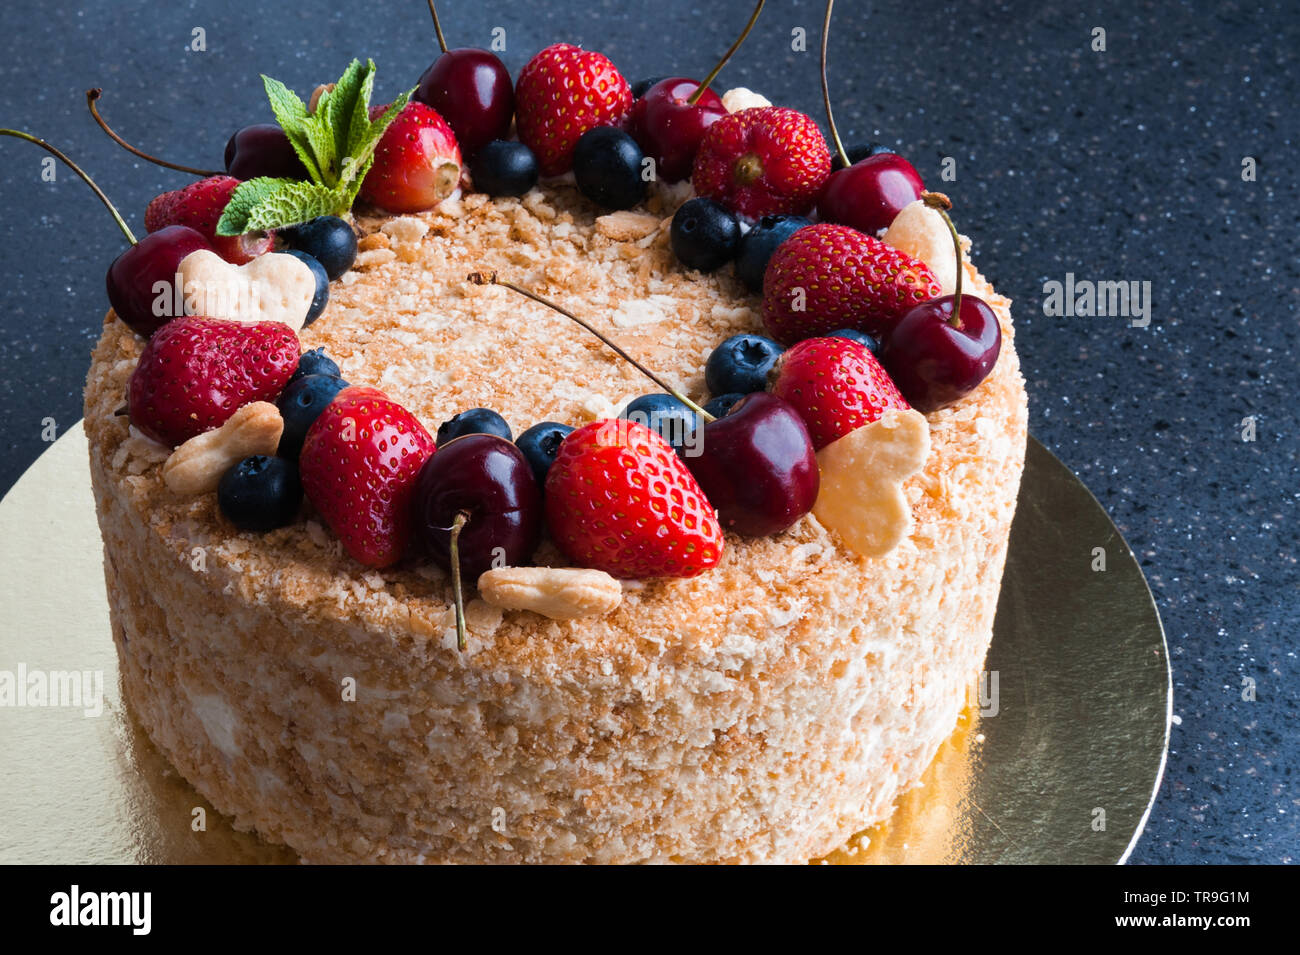 sponge cake with berries on dark background Stock Photo